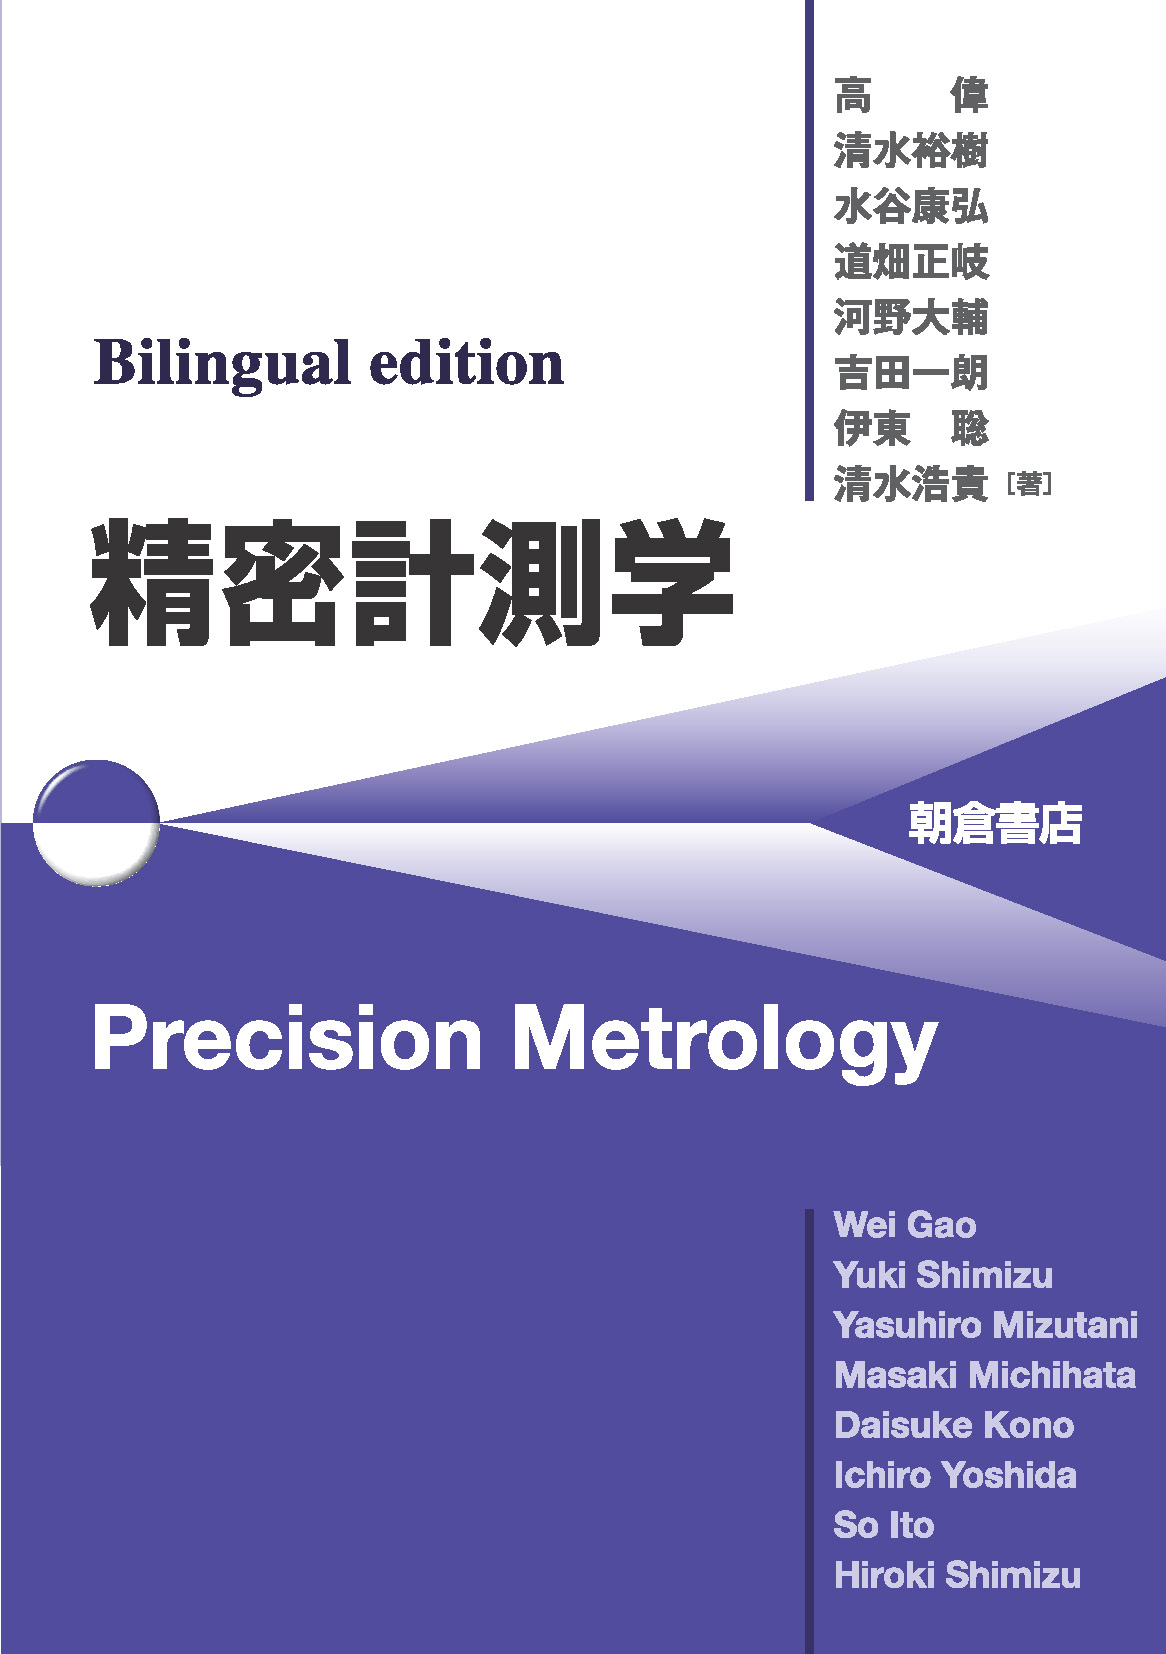 : Bilingual edition 精密計測学 Precision Metrology 